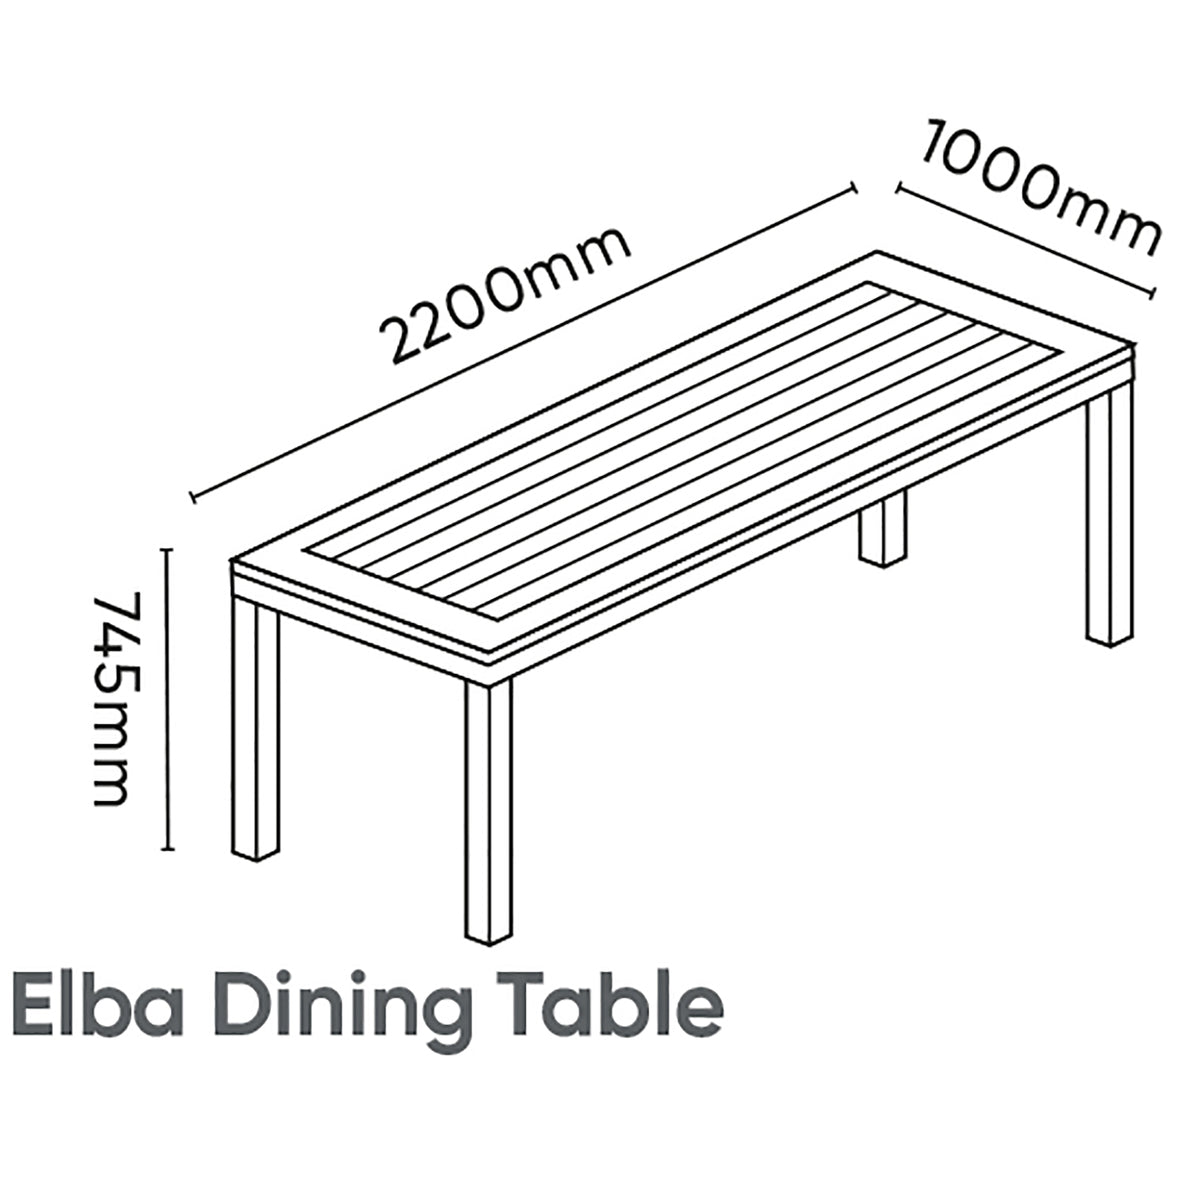 Kettler Elba Teak And Aluminium Rectangular Bench Set 2.2m x 1m